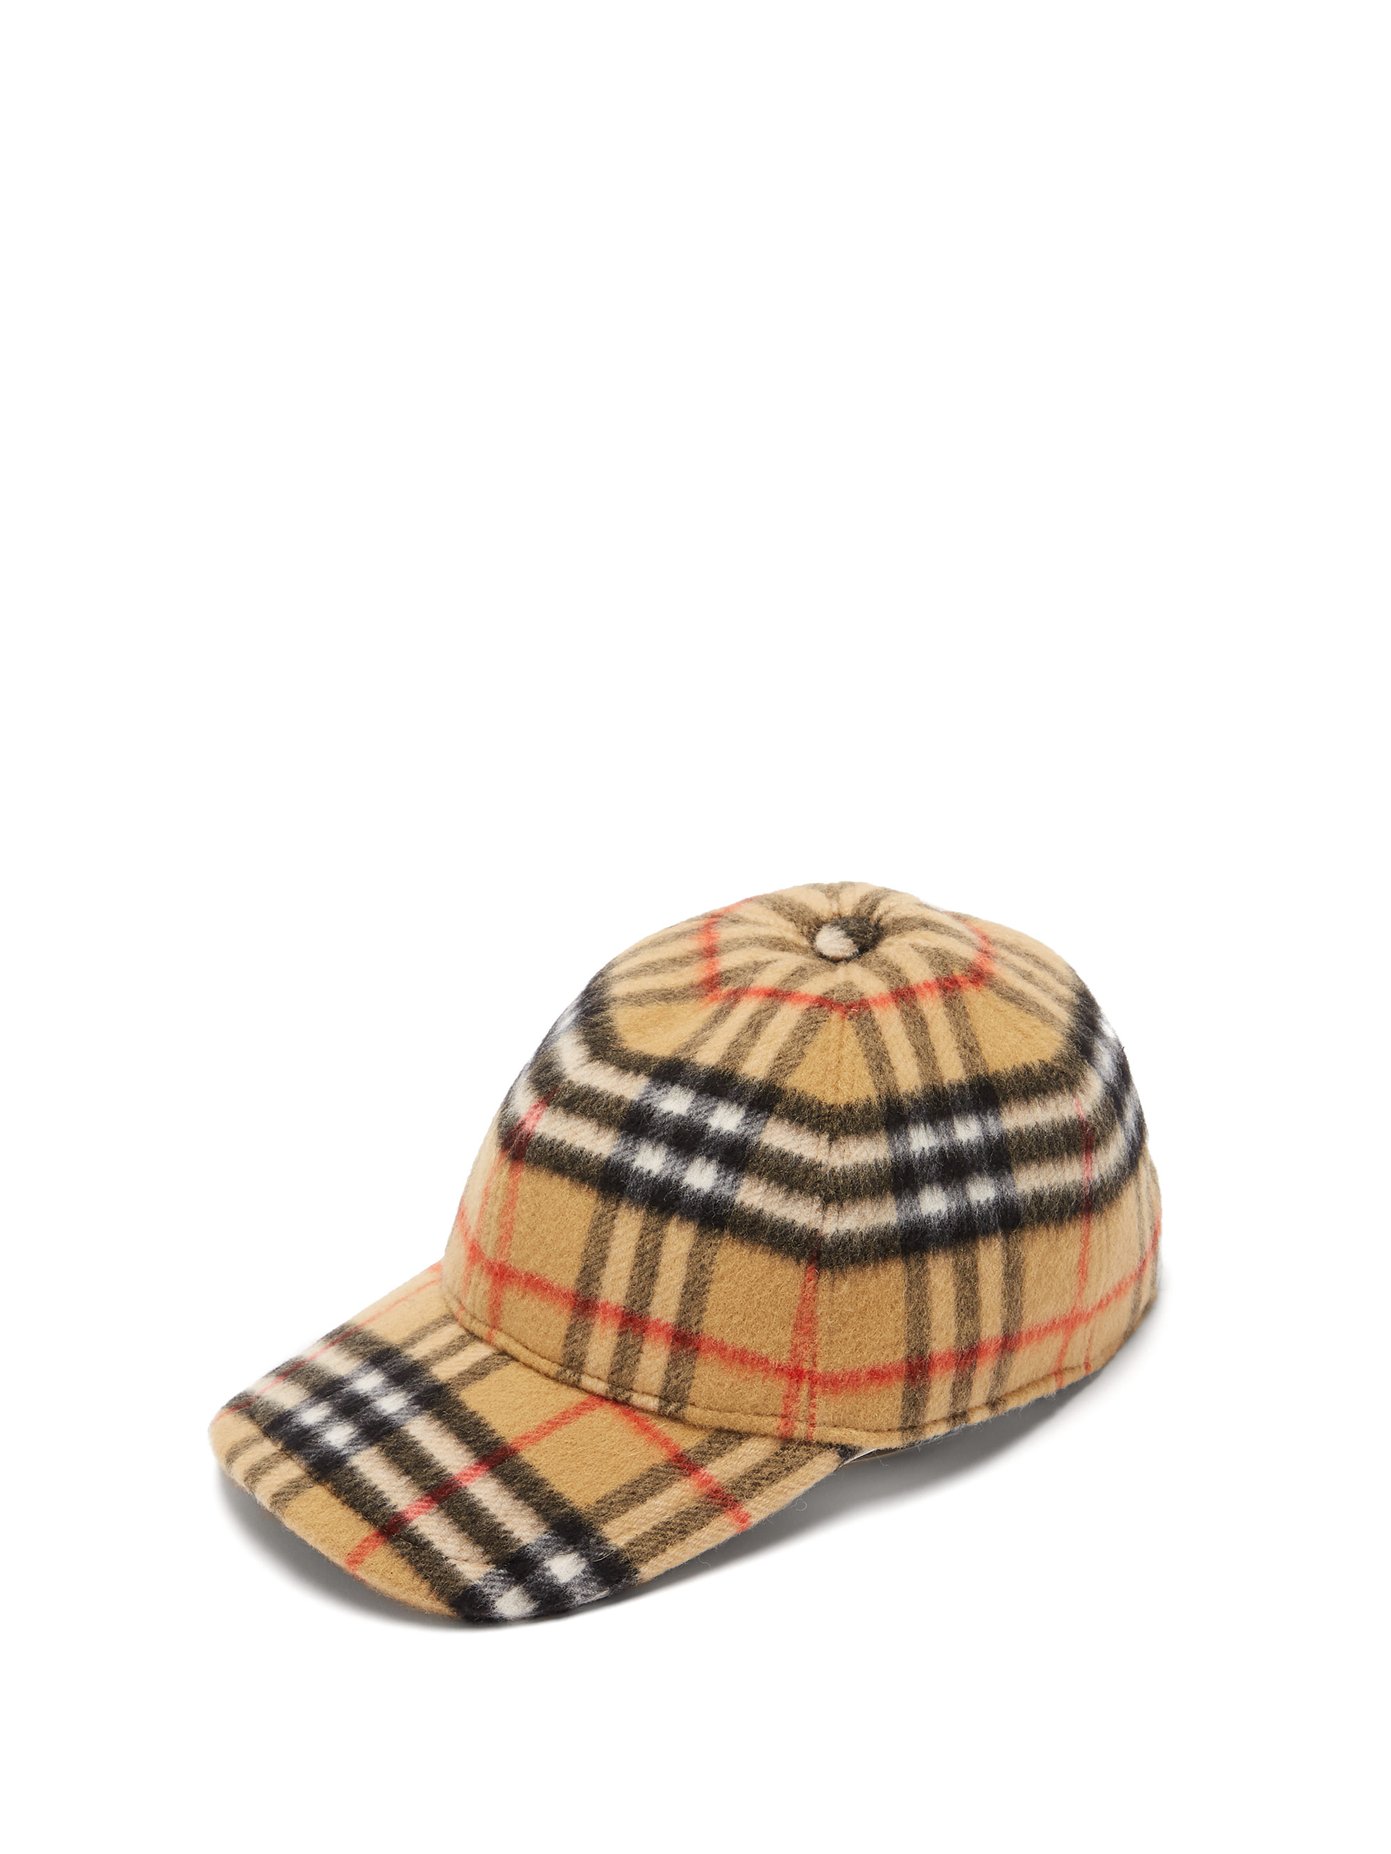 burberry wool hat